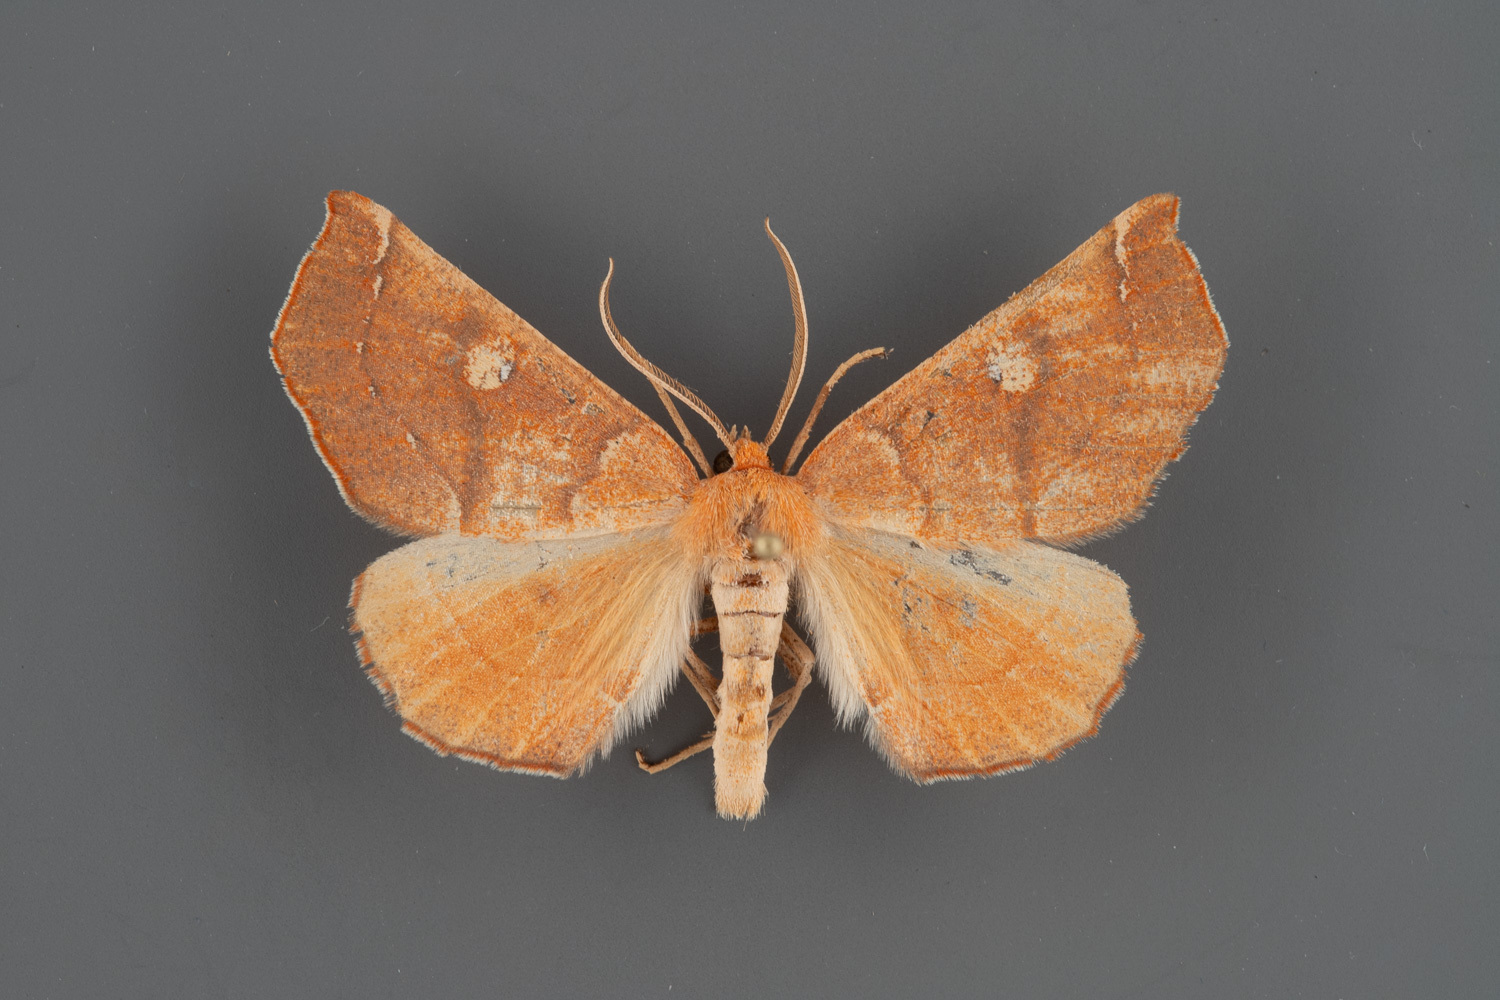 6874-Caripeta-macularia-male-iii-121